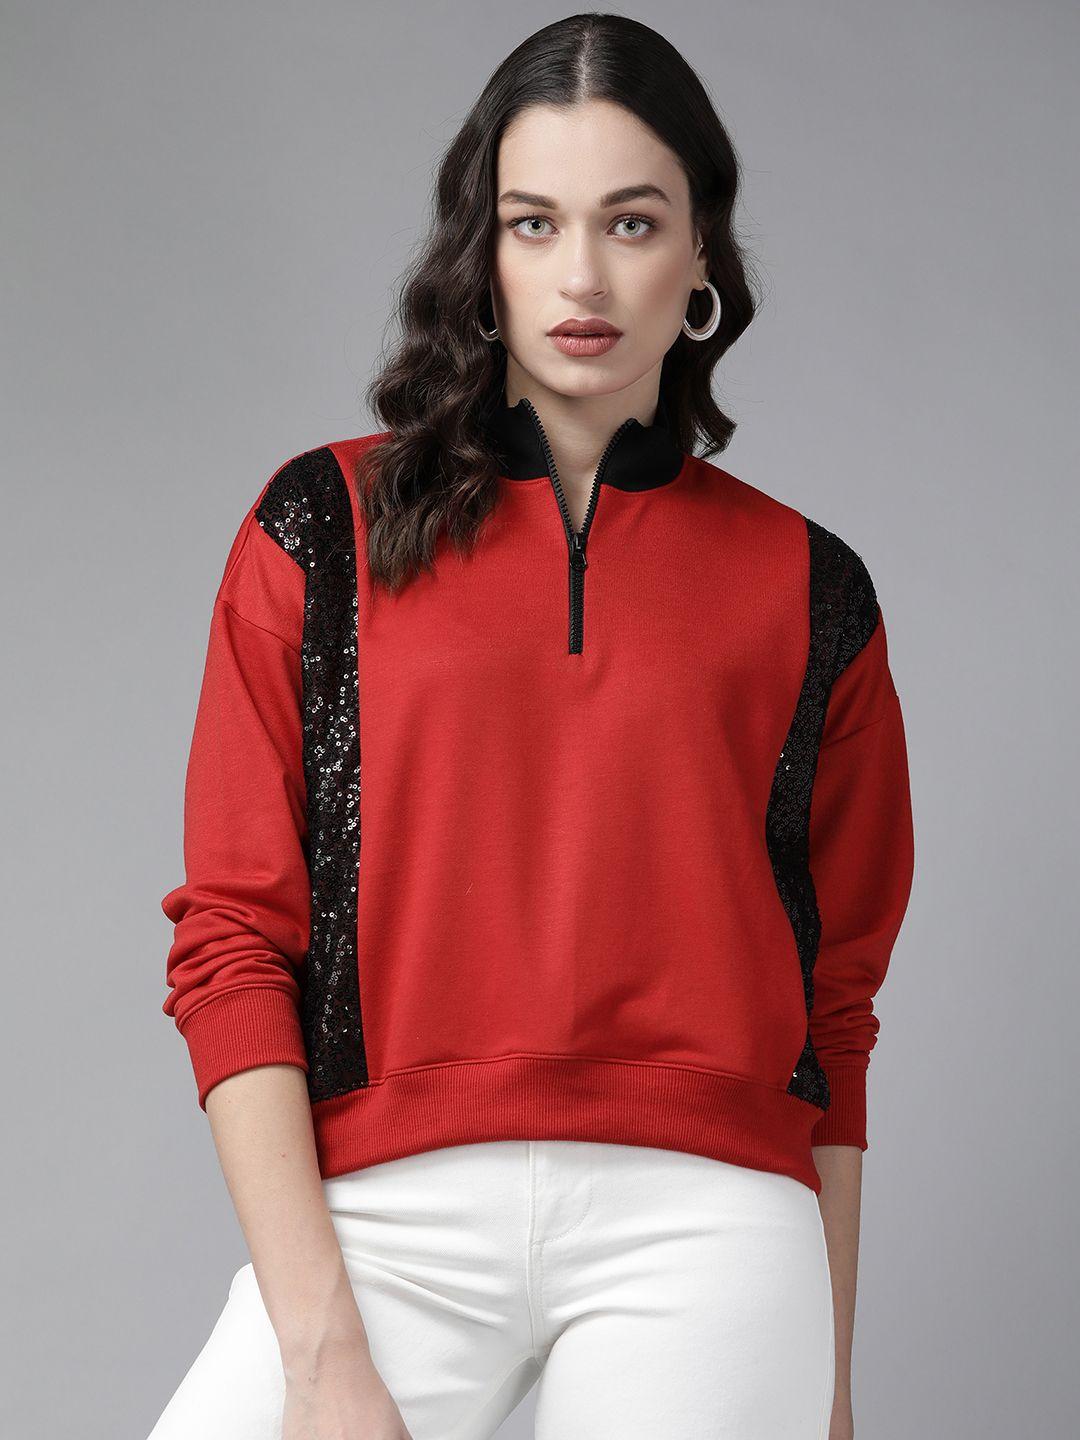 kassually women red & black sequinned sweatshirt